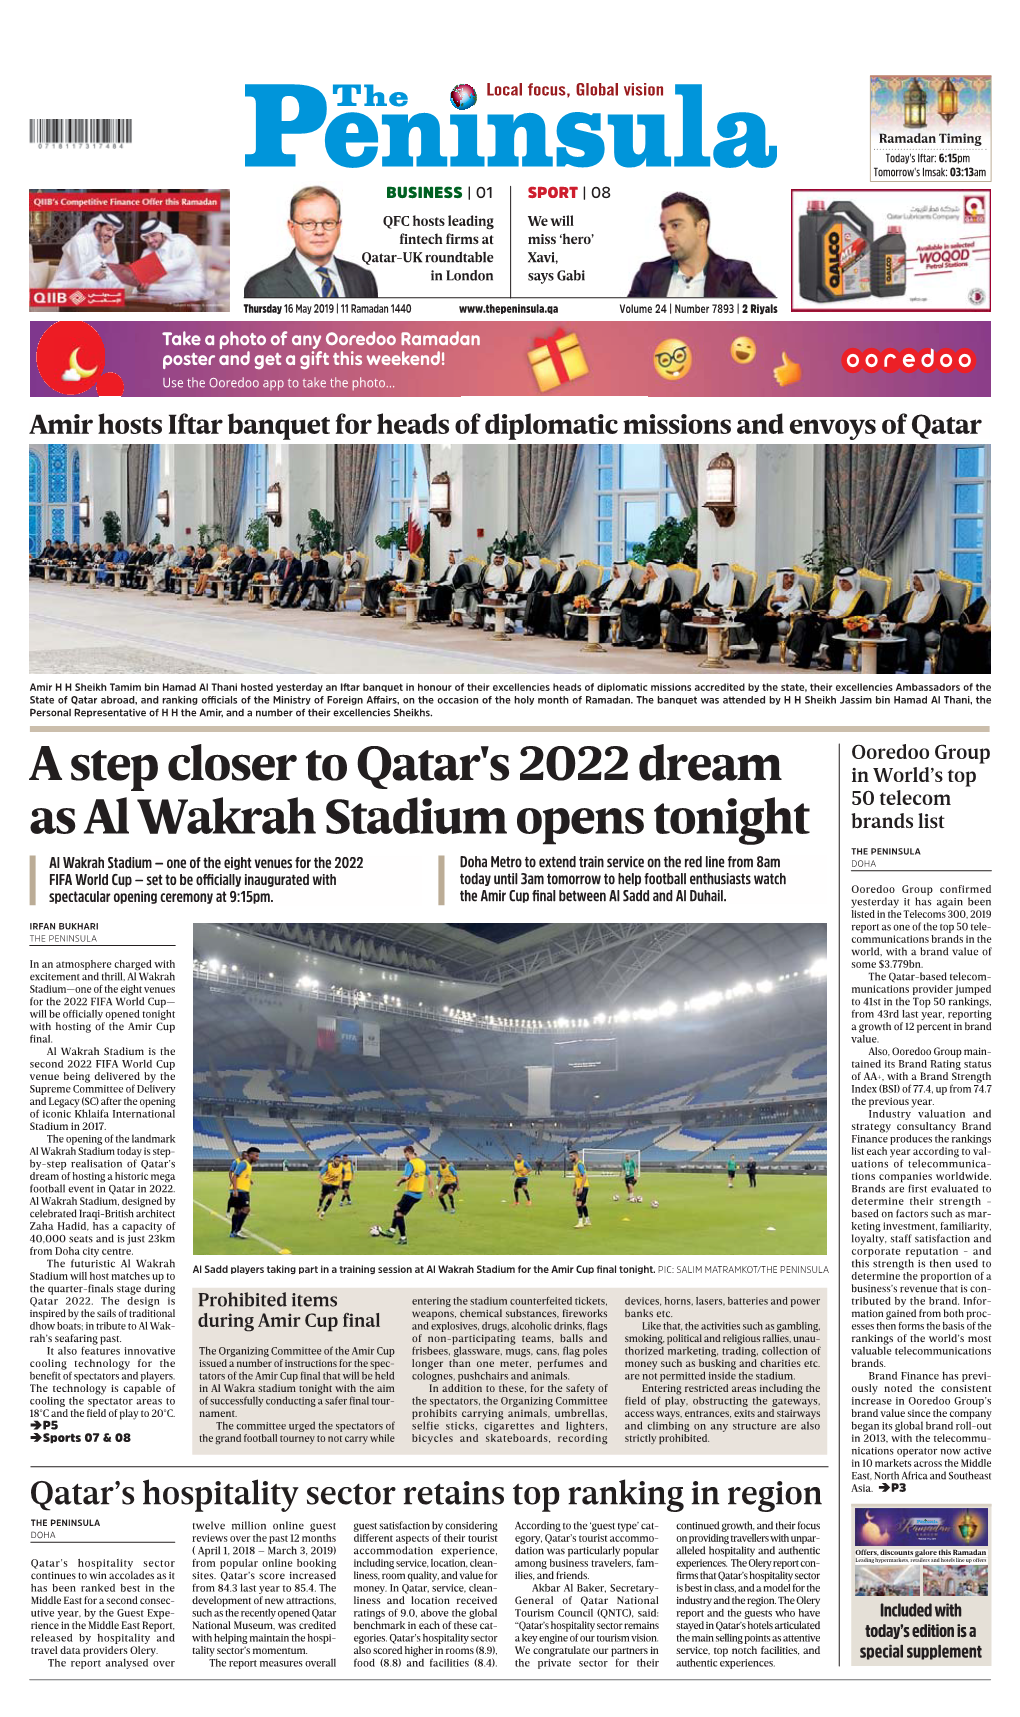 A Step Closer to Qatar's 2022 Dream As Al Wakrah Stadium Opens Tonight